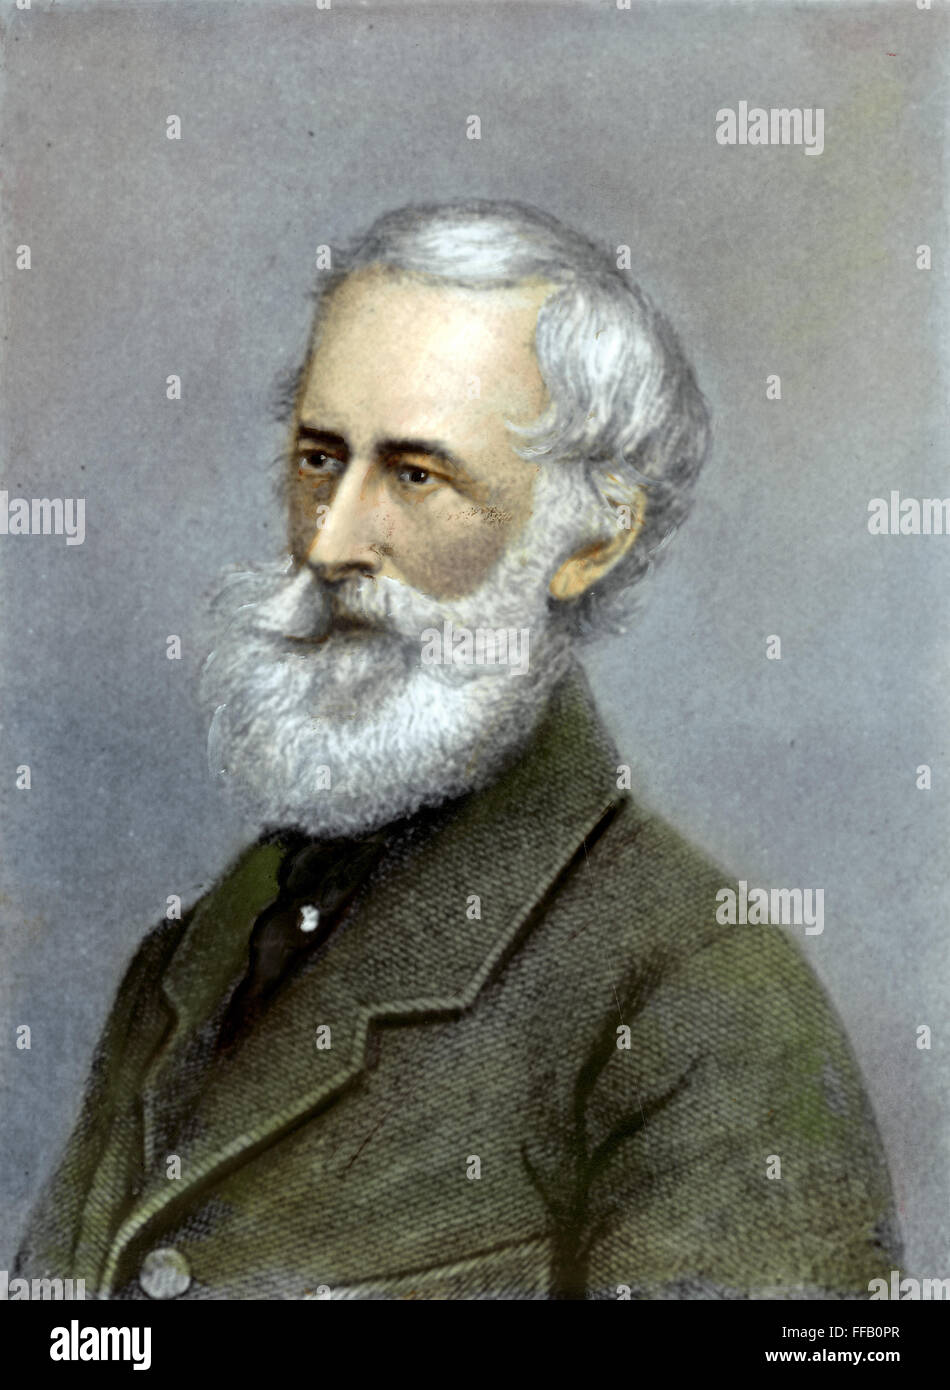 ALFRED KRUPP (1812-1887). /nGerman industrialist. Color line engraving, German, 19th century. Stock Photo